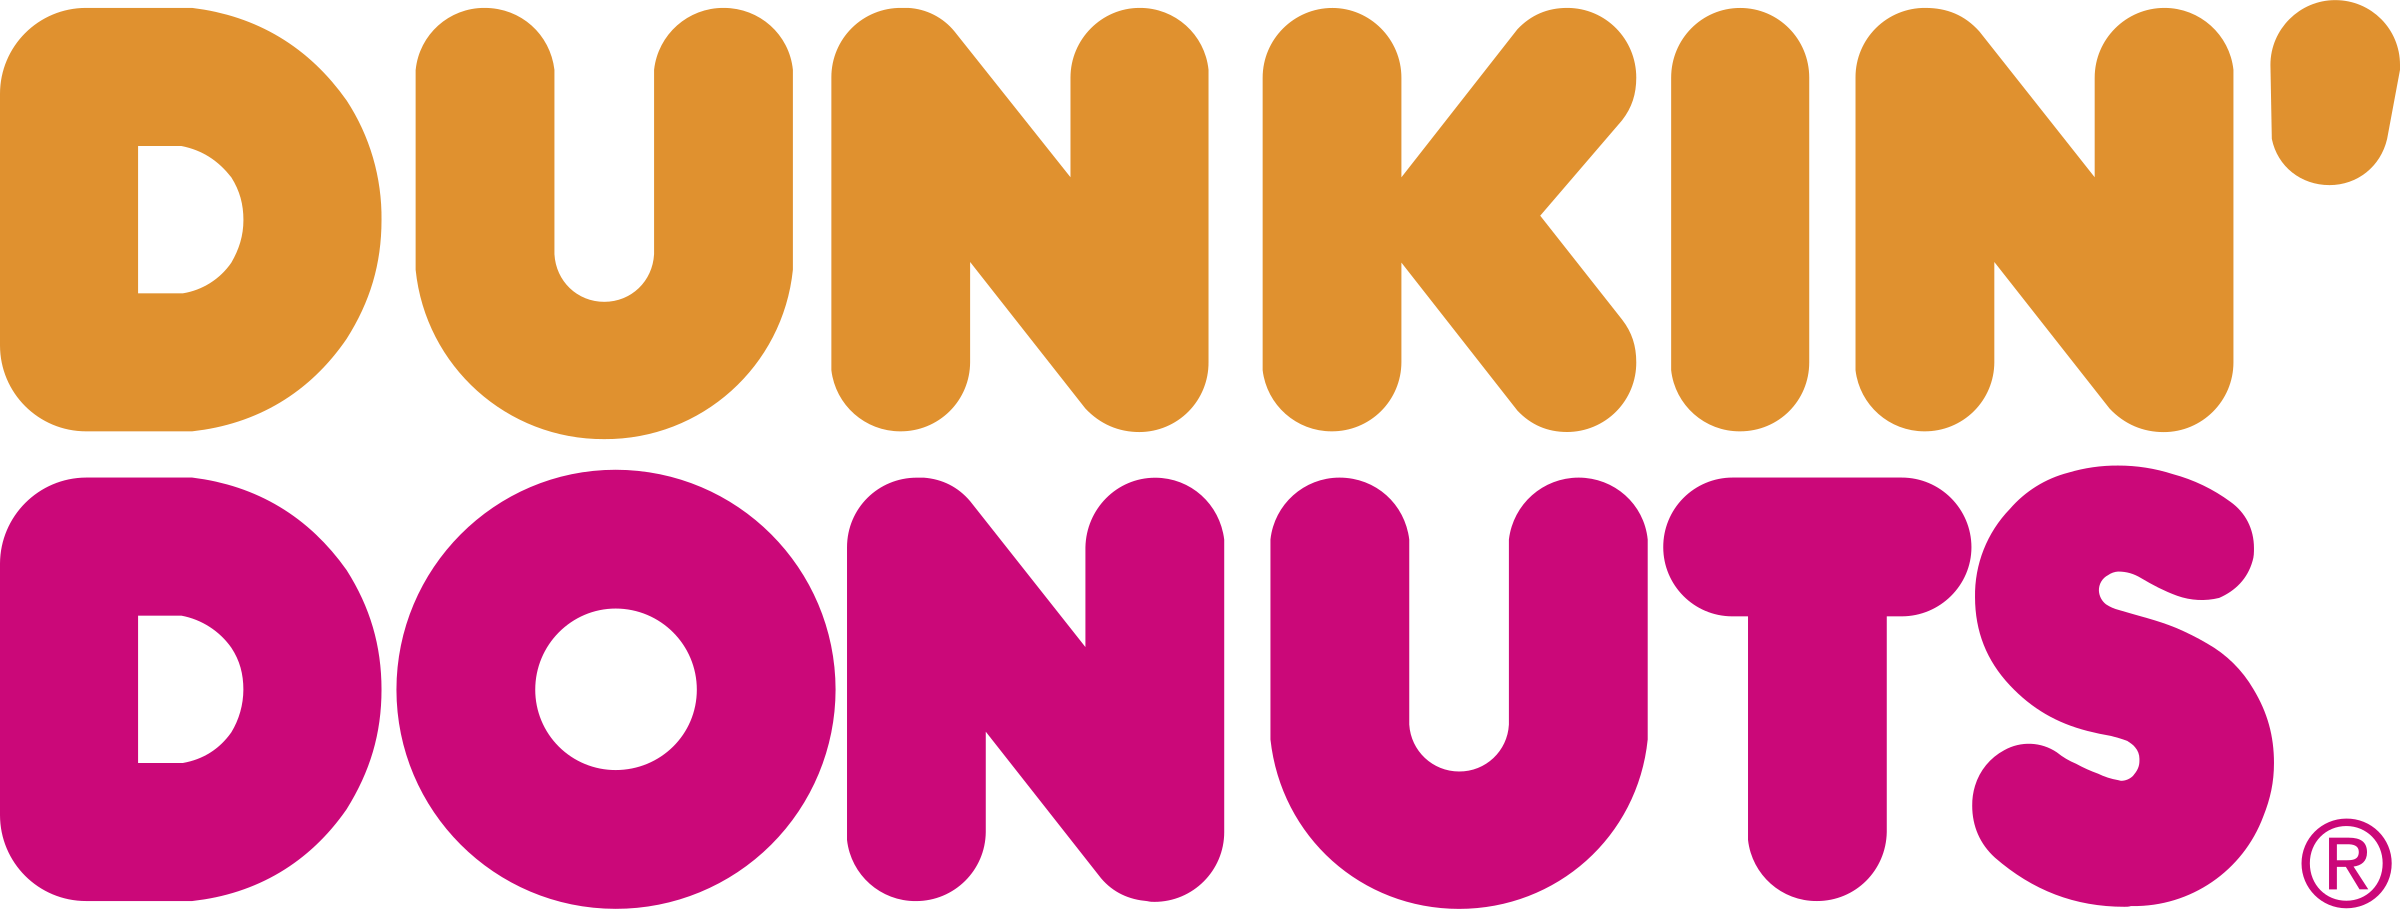 Dunkin' Donuts Logo Png Transparent - Dunkin Donuts Original Flavor Coffee K-cups (2400x909)